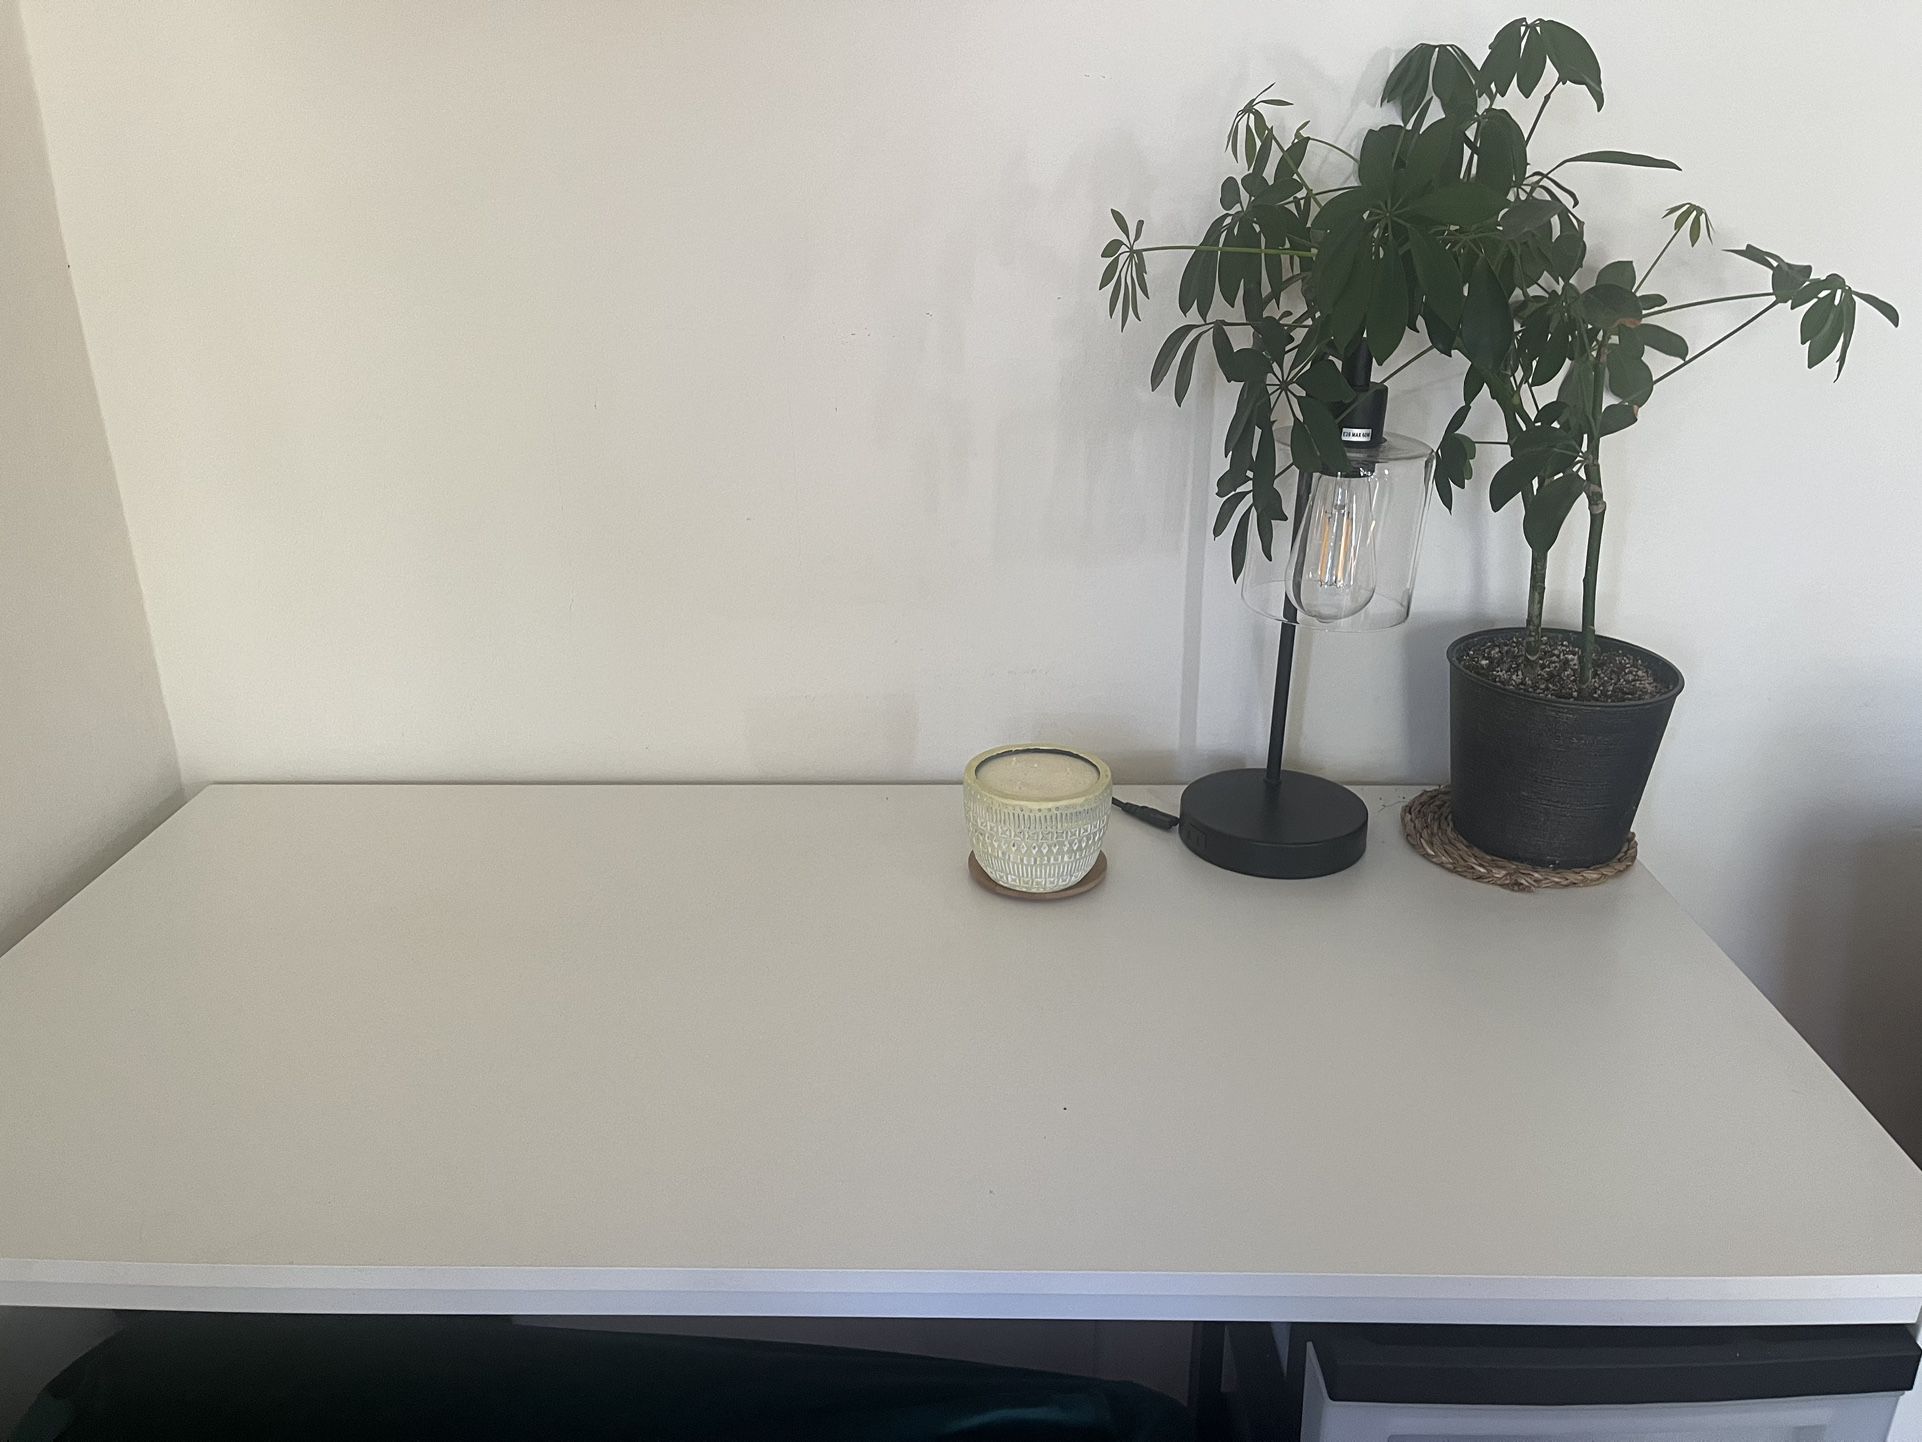 Desk 